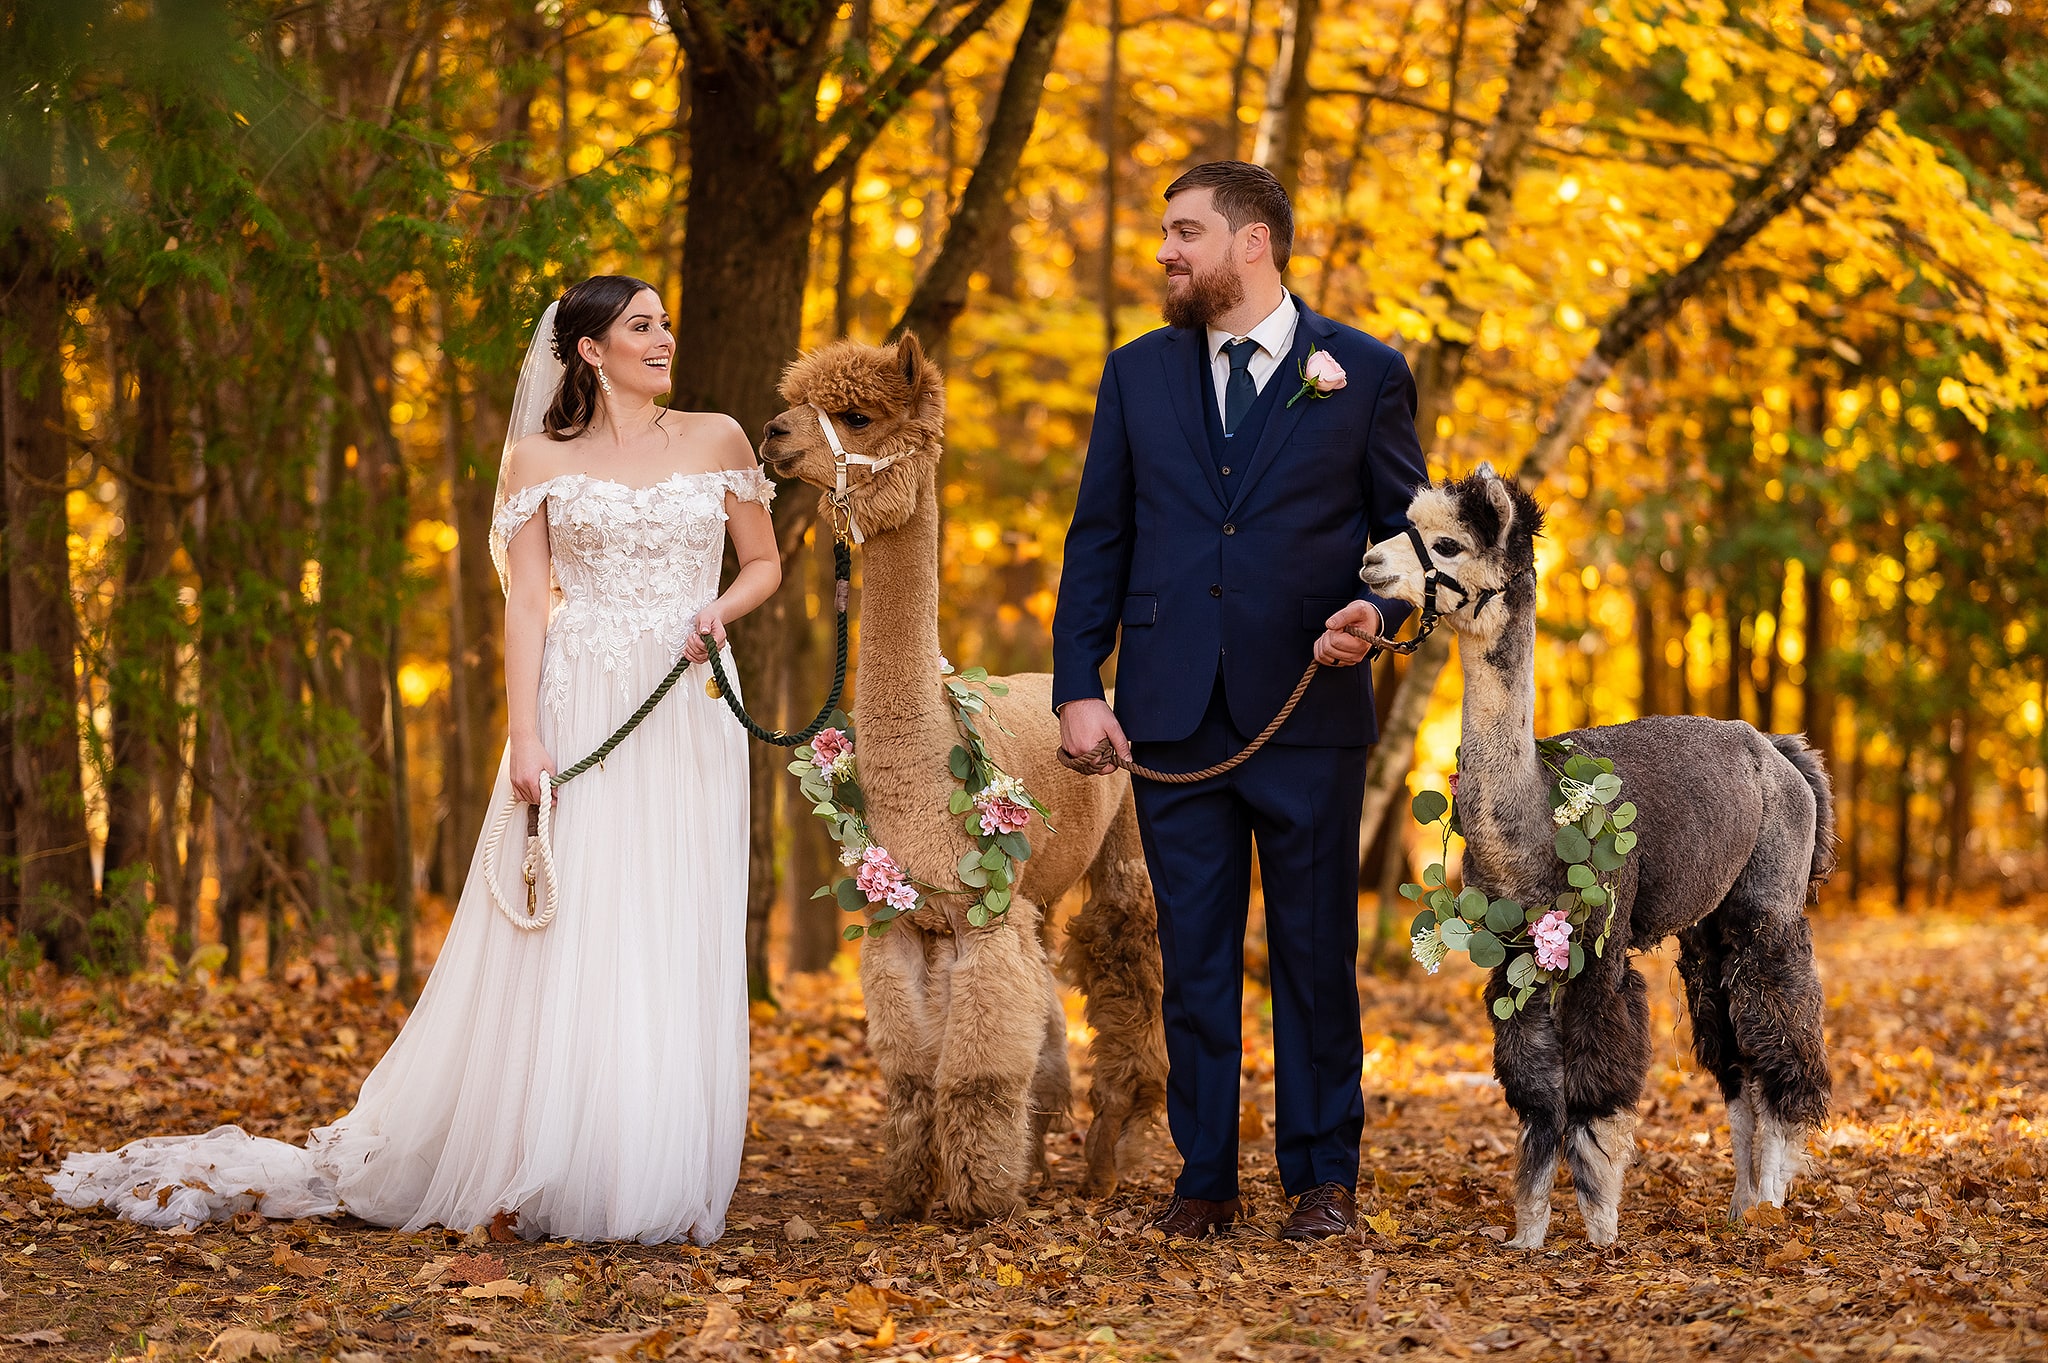 Samantha and Coltyn - Autumn wedding photo with alpacas